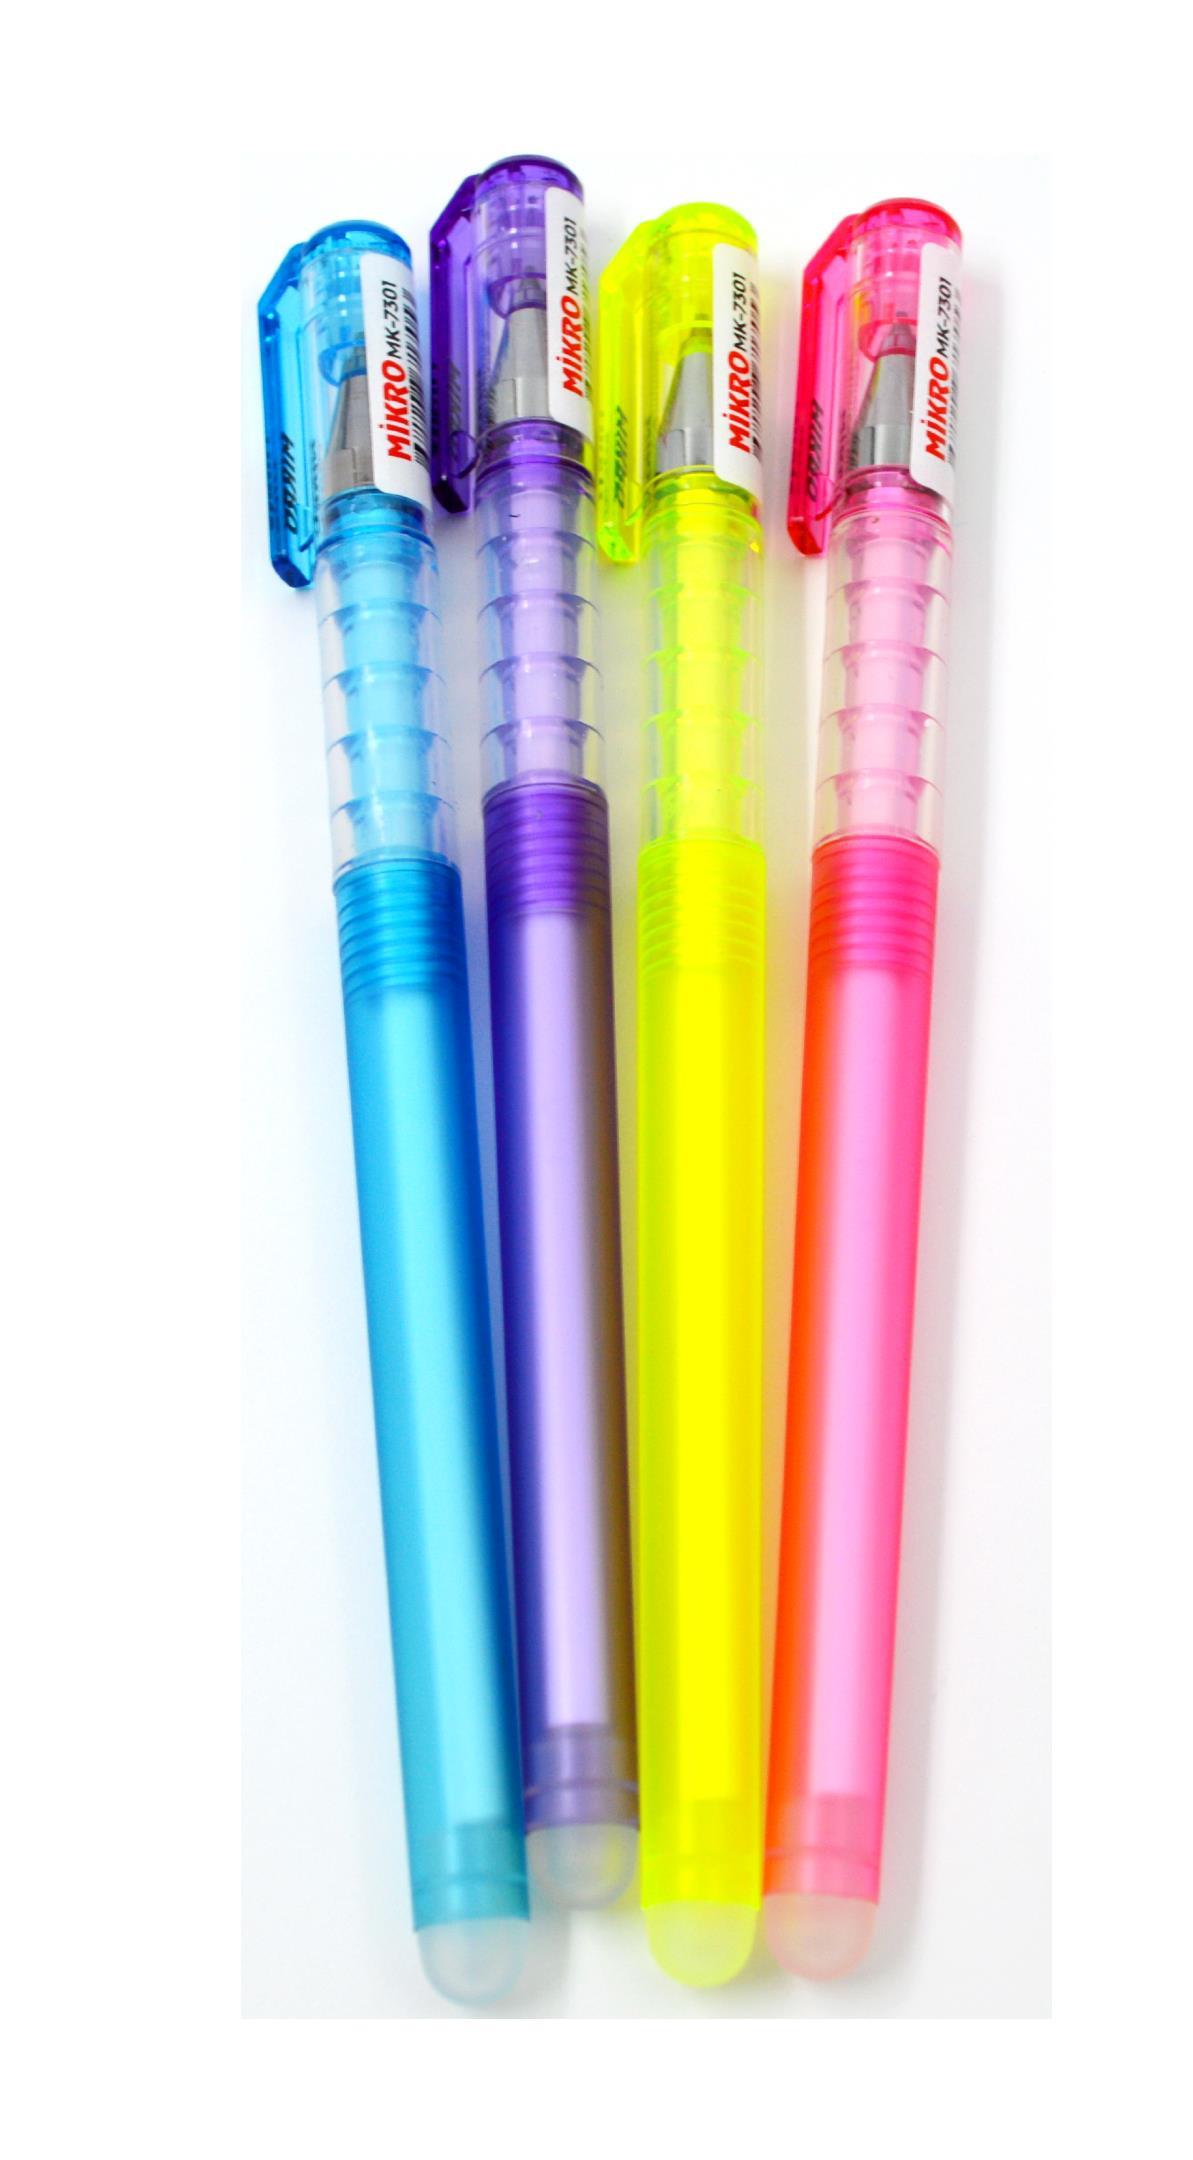 Mikro Silinebilir Jel Kalem Mavi Renkli 0,5 mmTükenmez KalemMİKRO